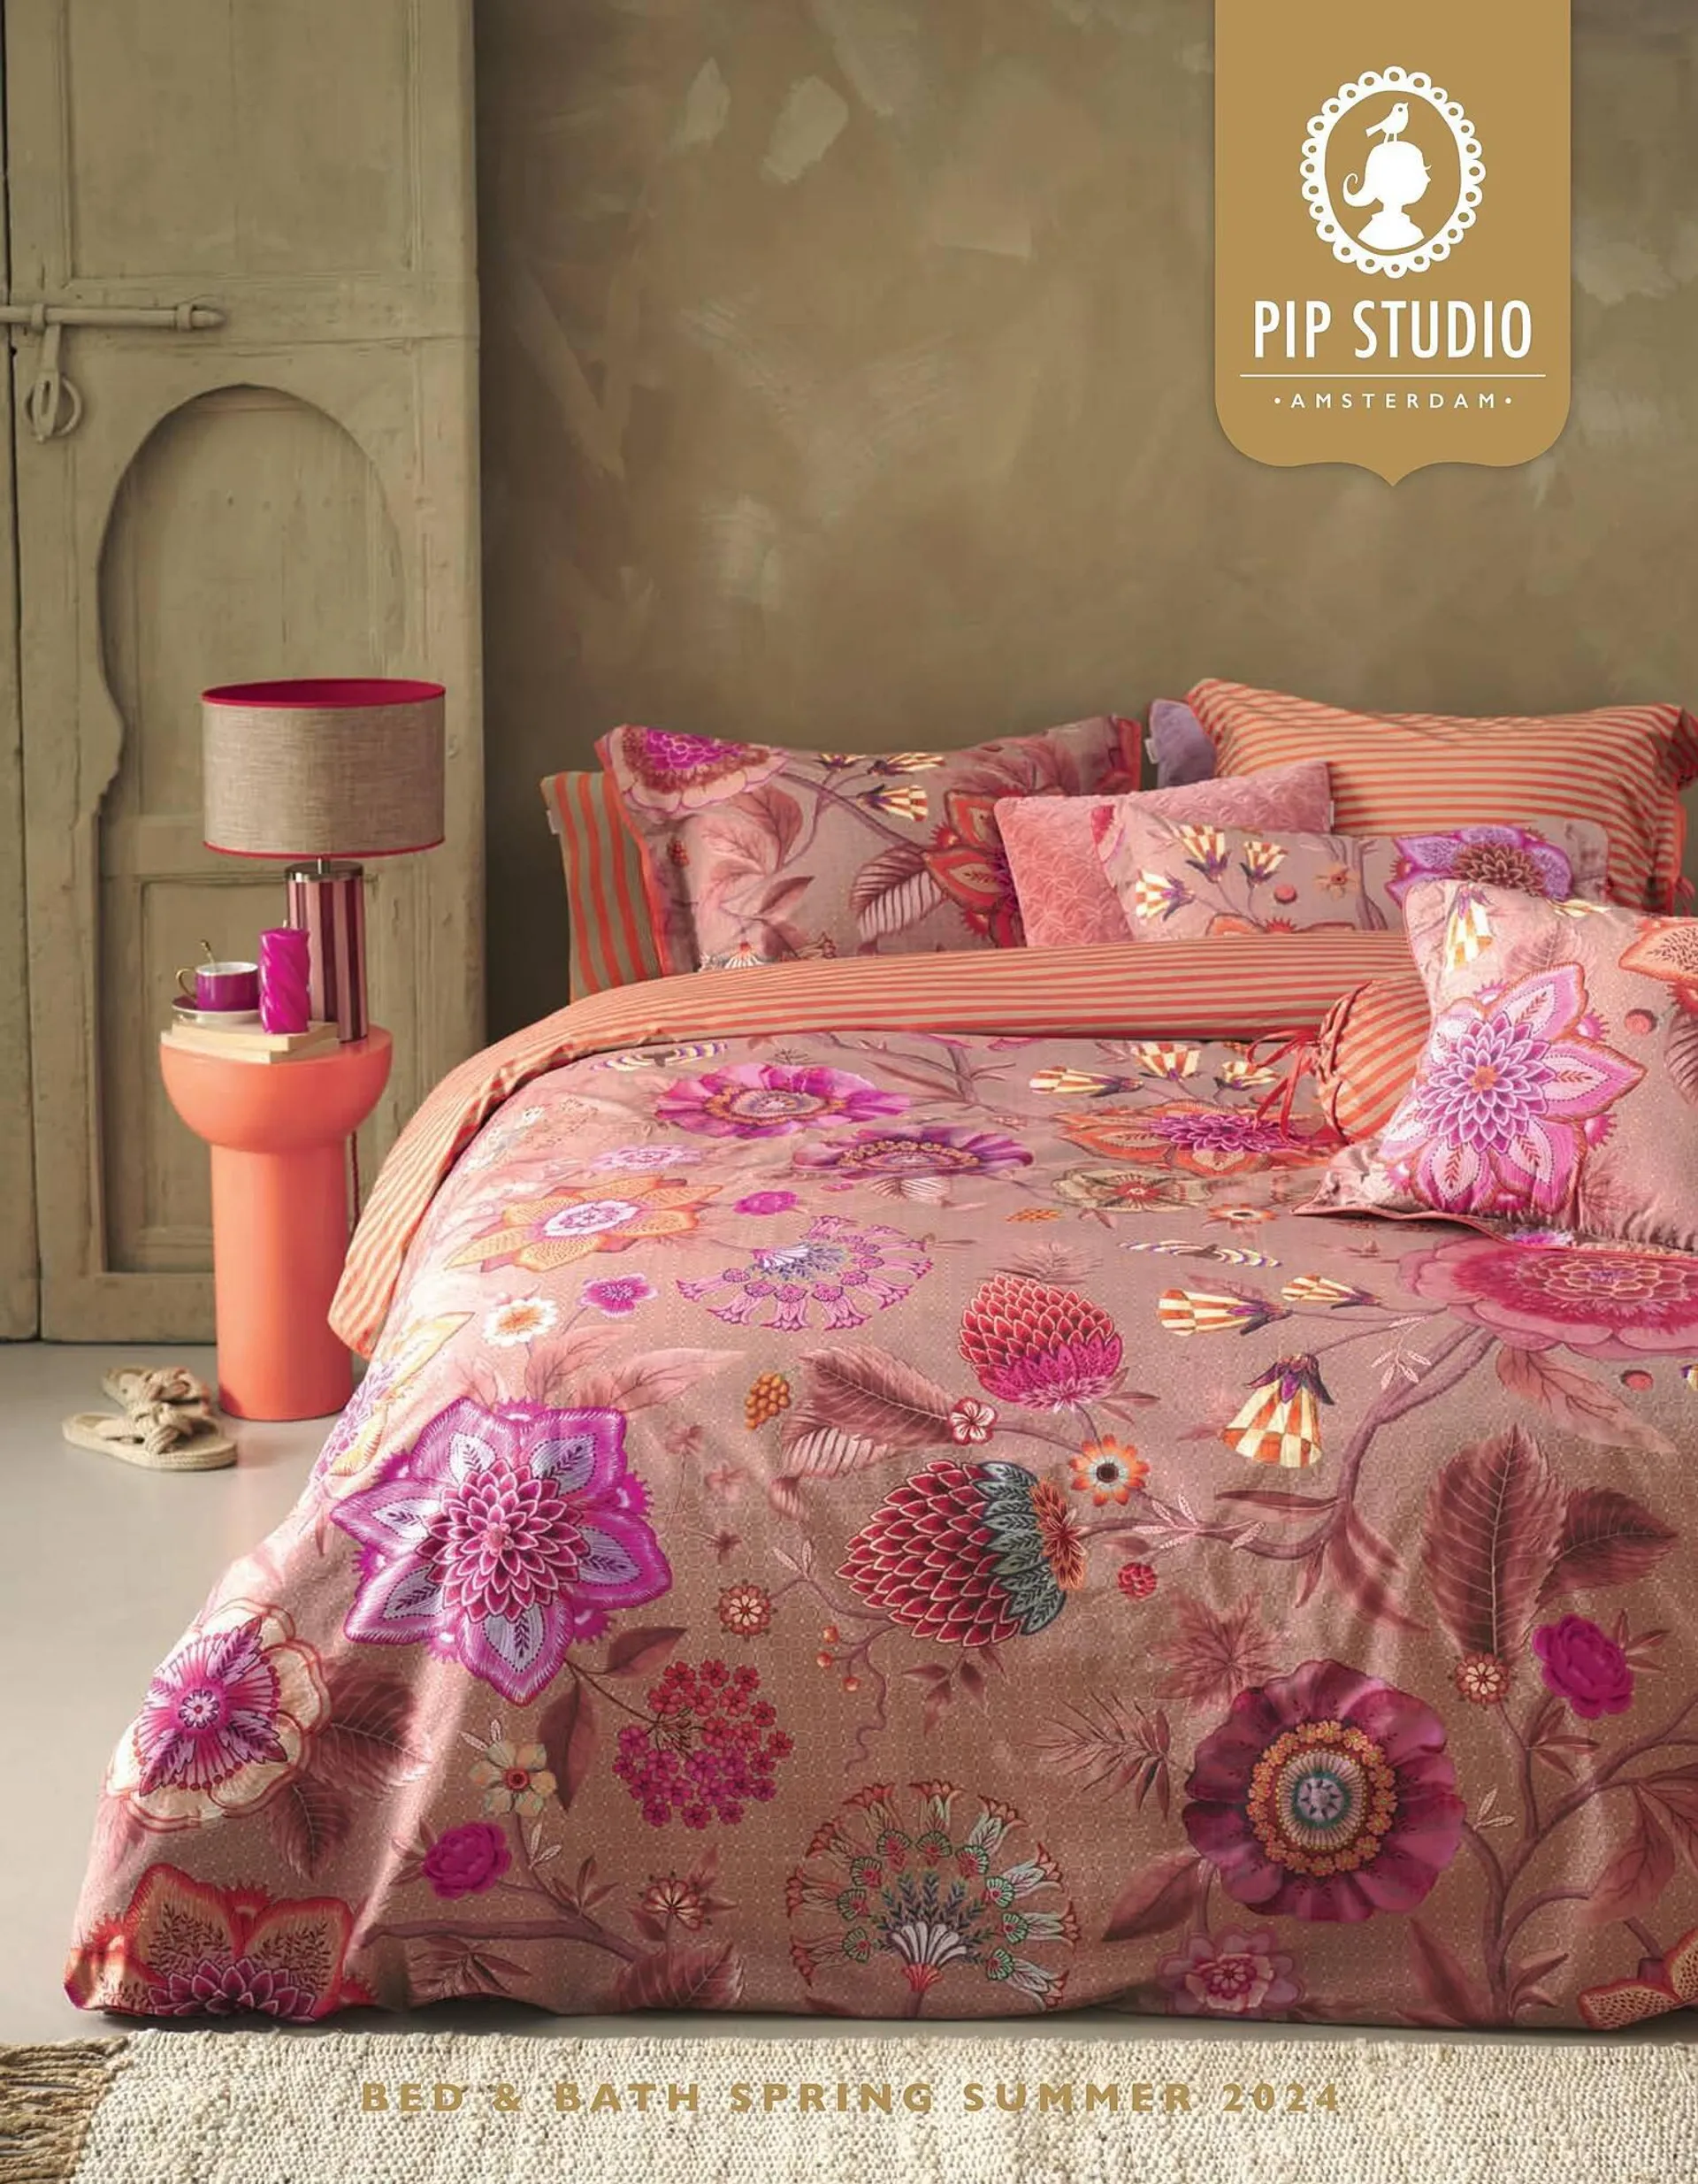 Pip Studio Bed & Bath Collection Spring Summer 2024 folder